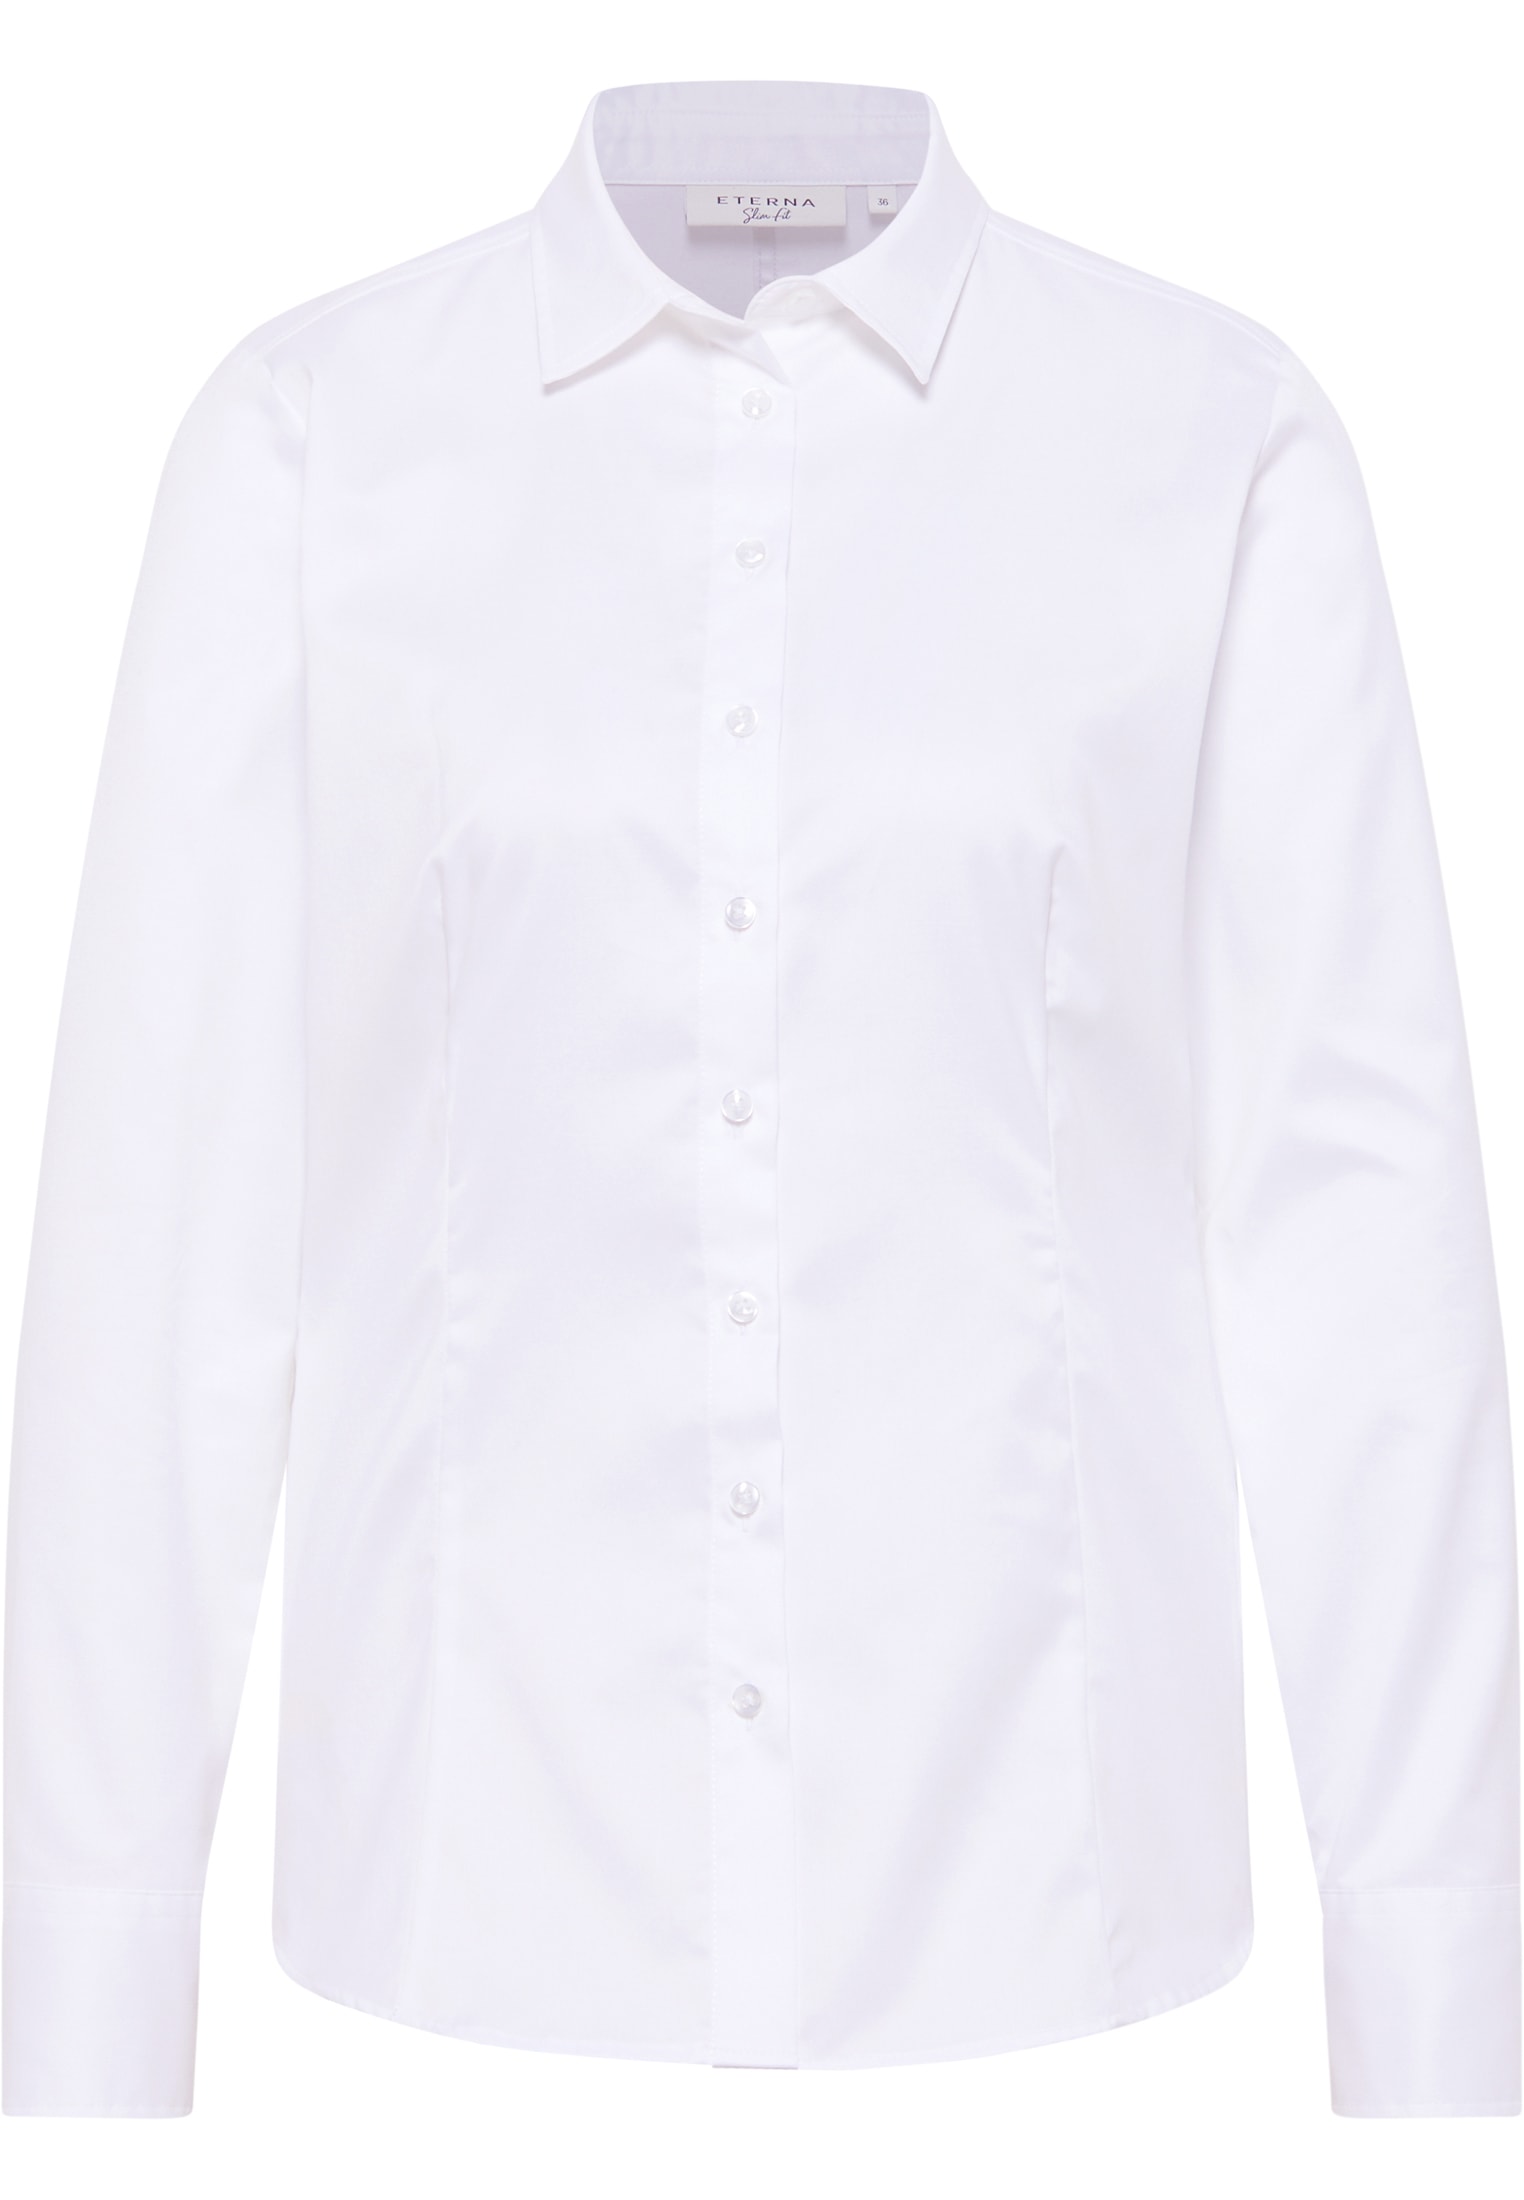 Cover Shirt Bluse in weiß weiß | 2BL00073-00-01-34-1/1 Langarm | | unifarben | 34